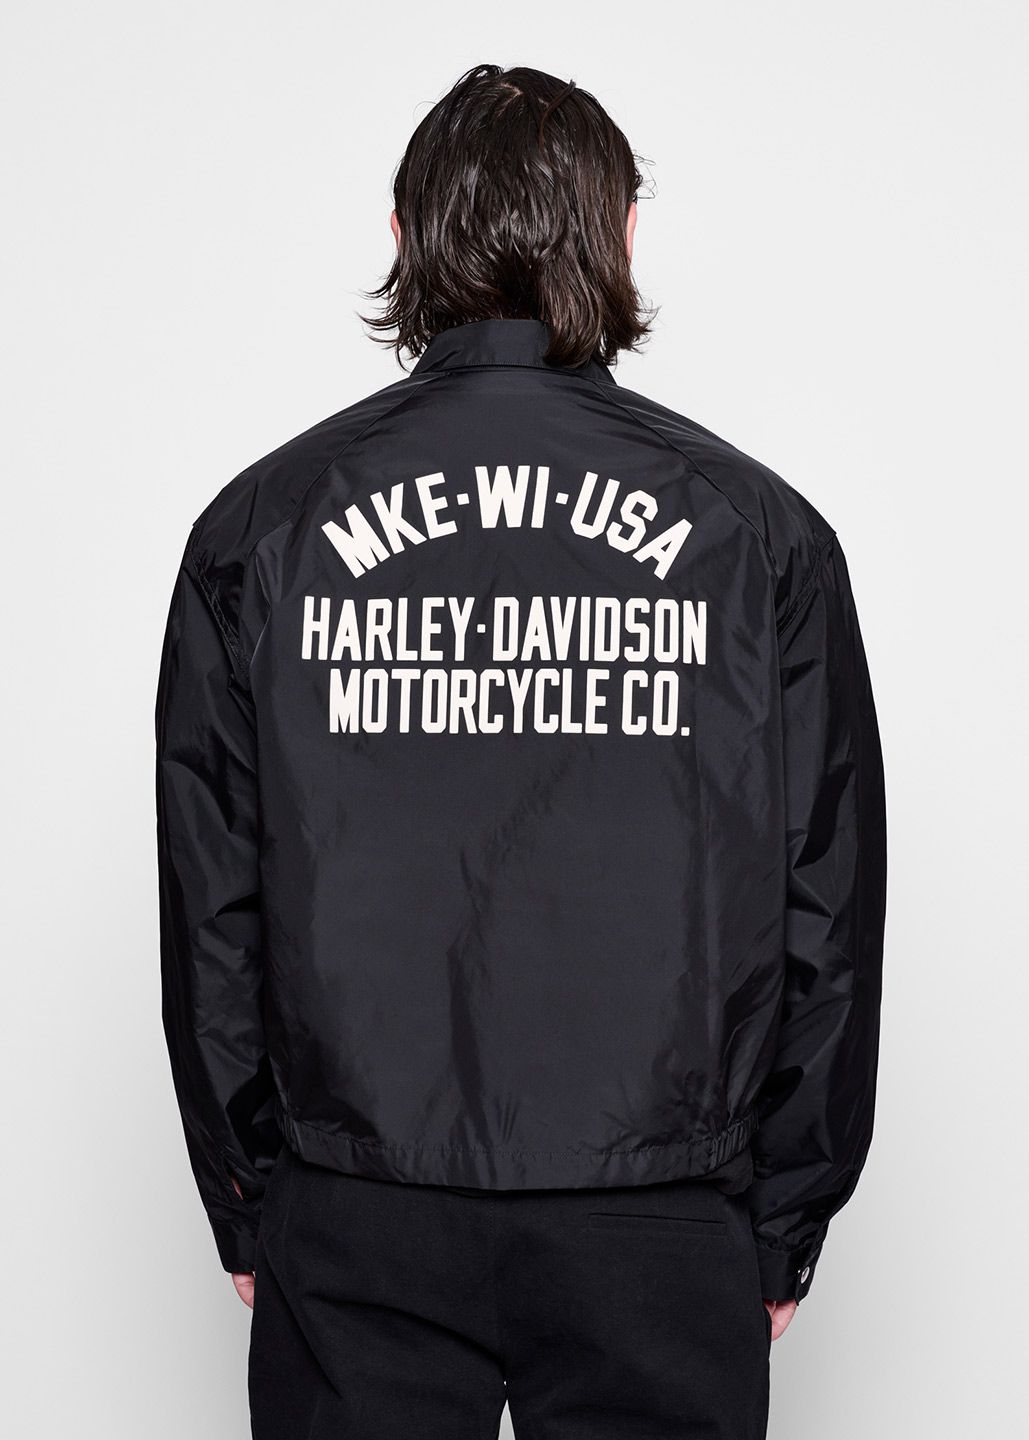 The Harley-Davidson Originals line promises to offer “a modern interpretation of the classics.”